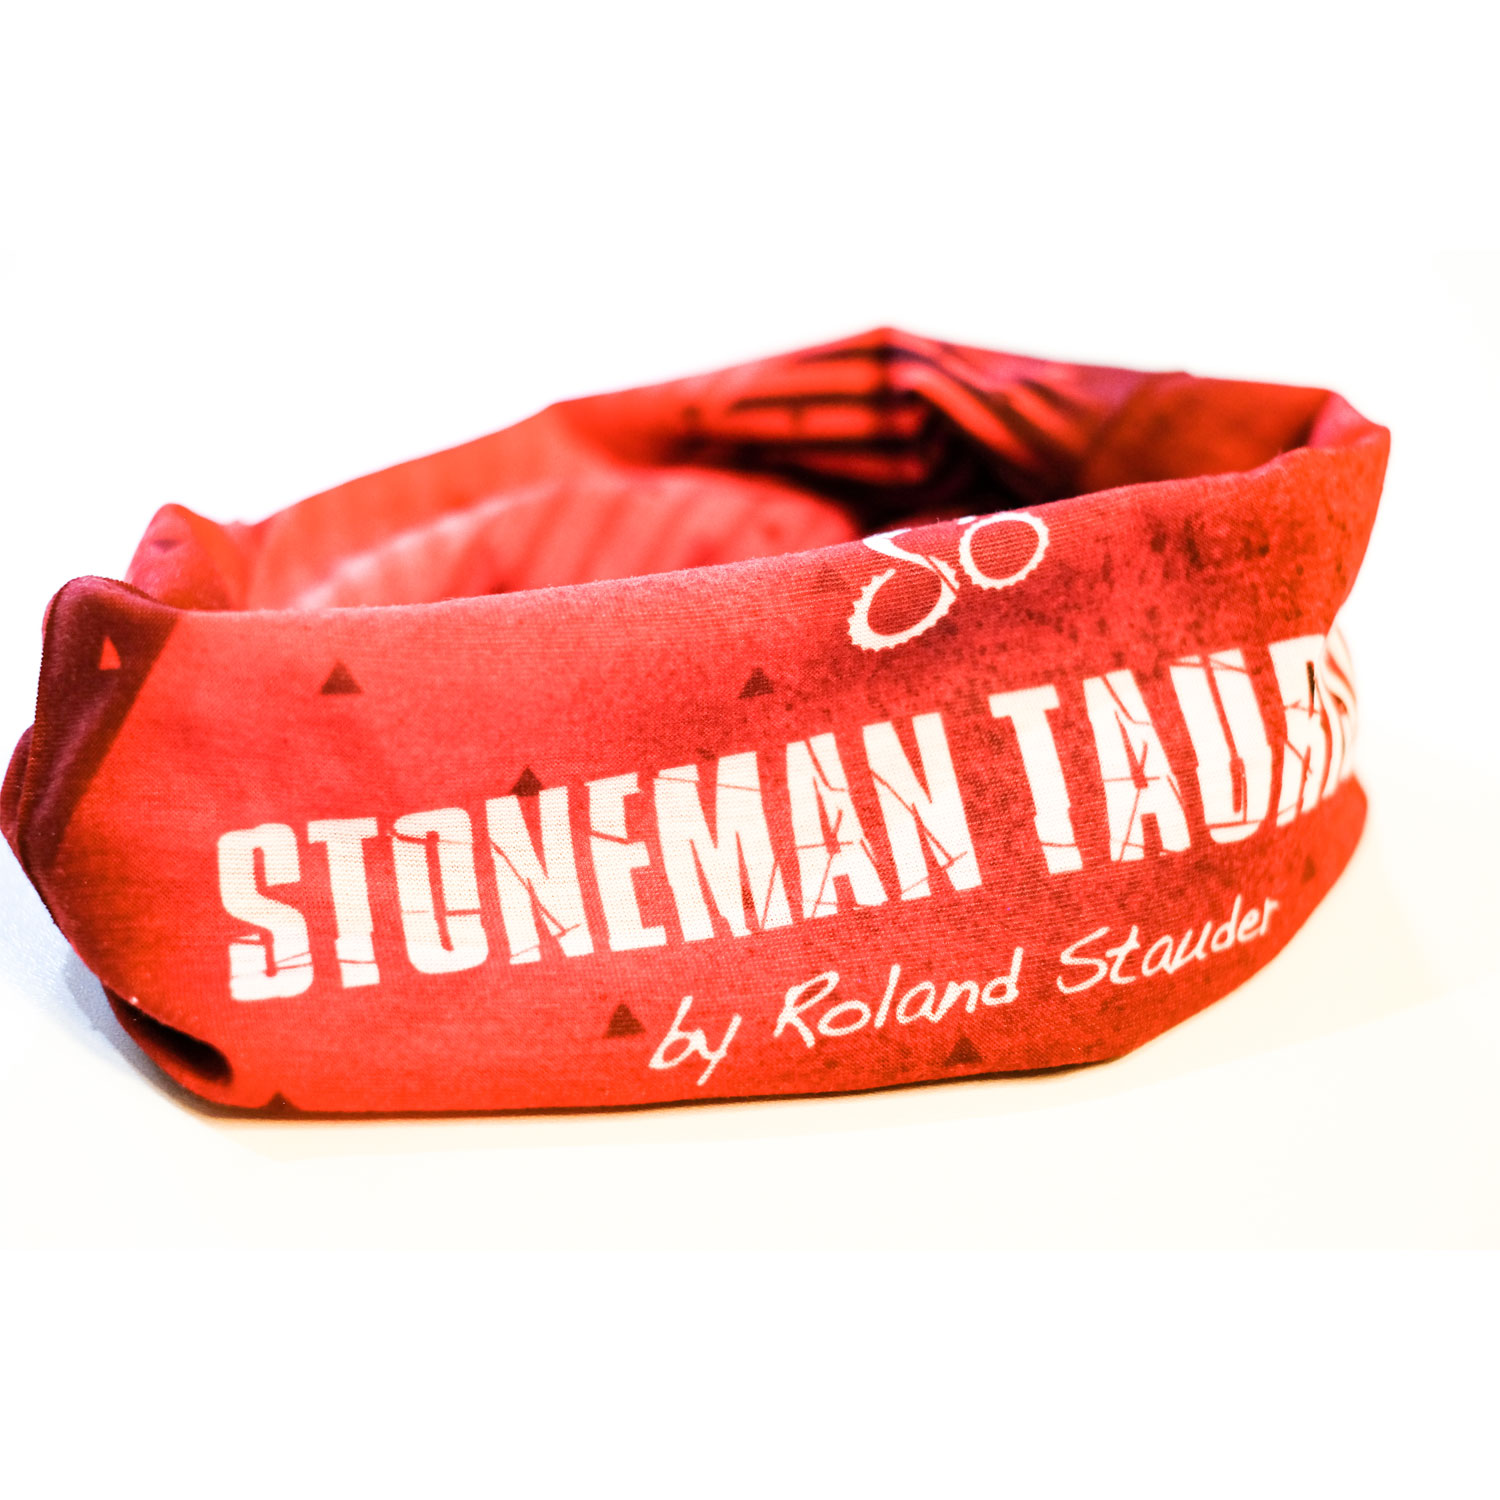 Productfoto van Stoneman Hero Multifunctional Cloth - Taurista